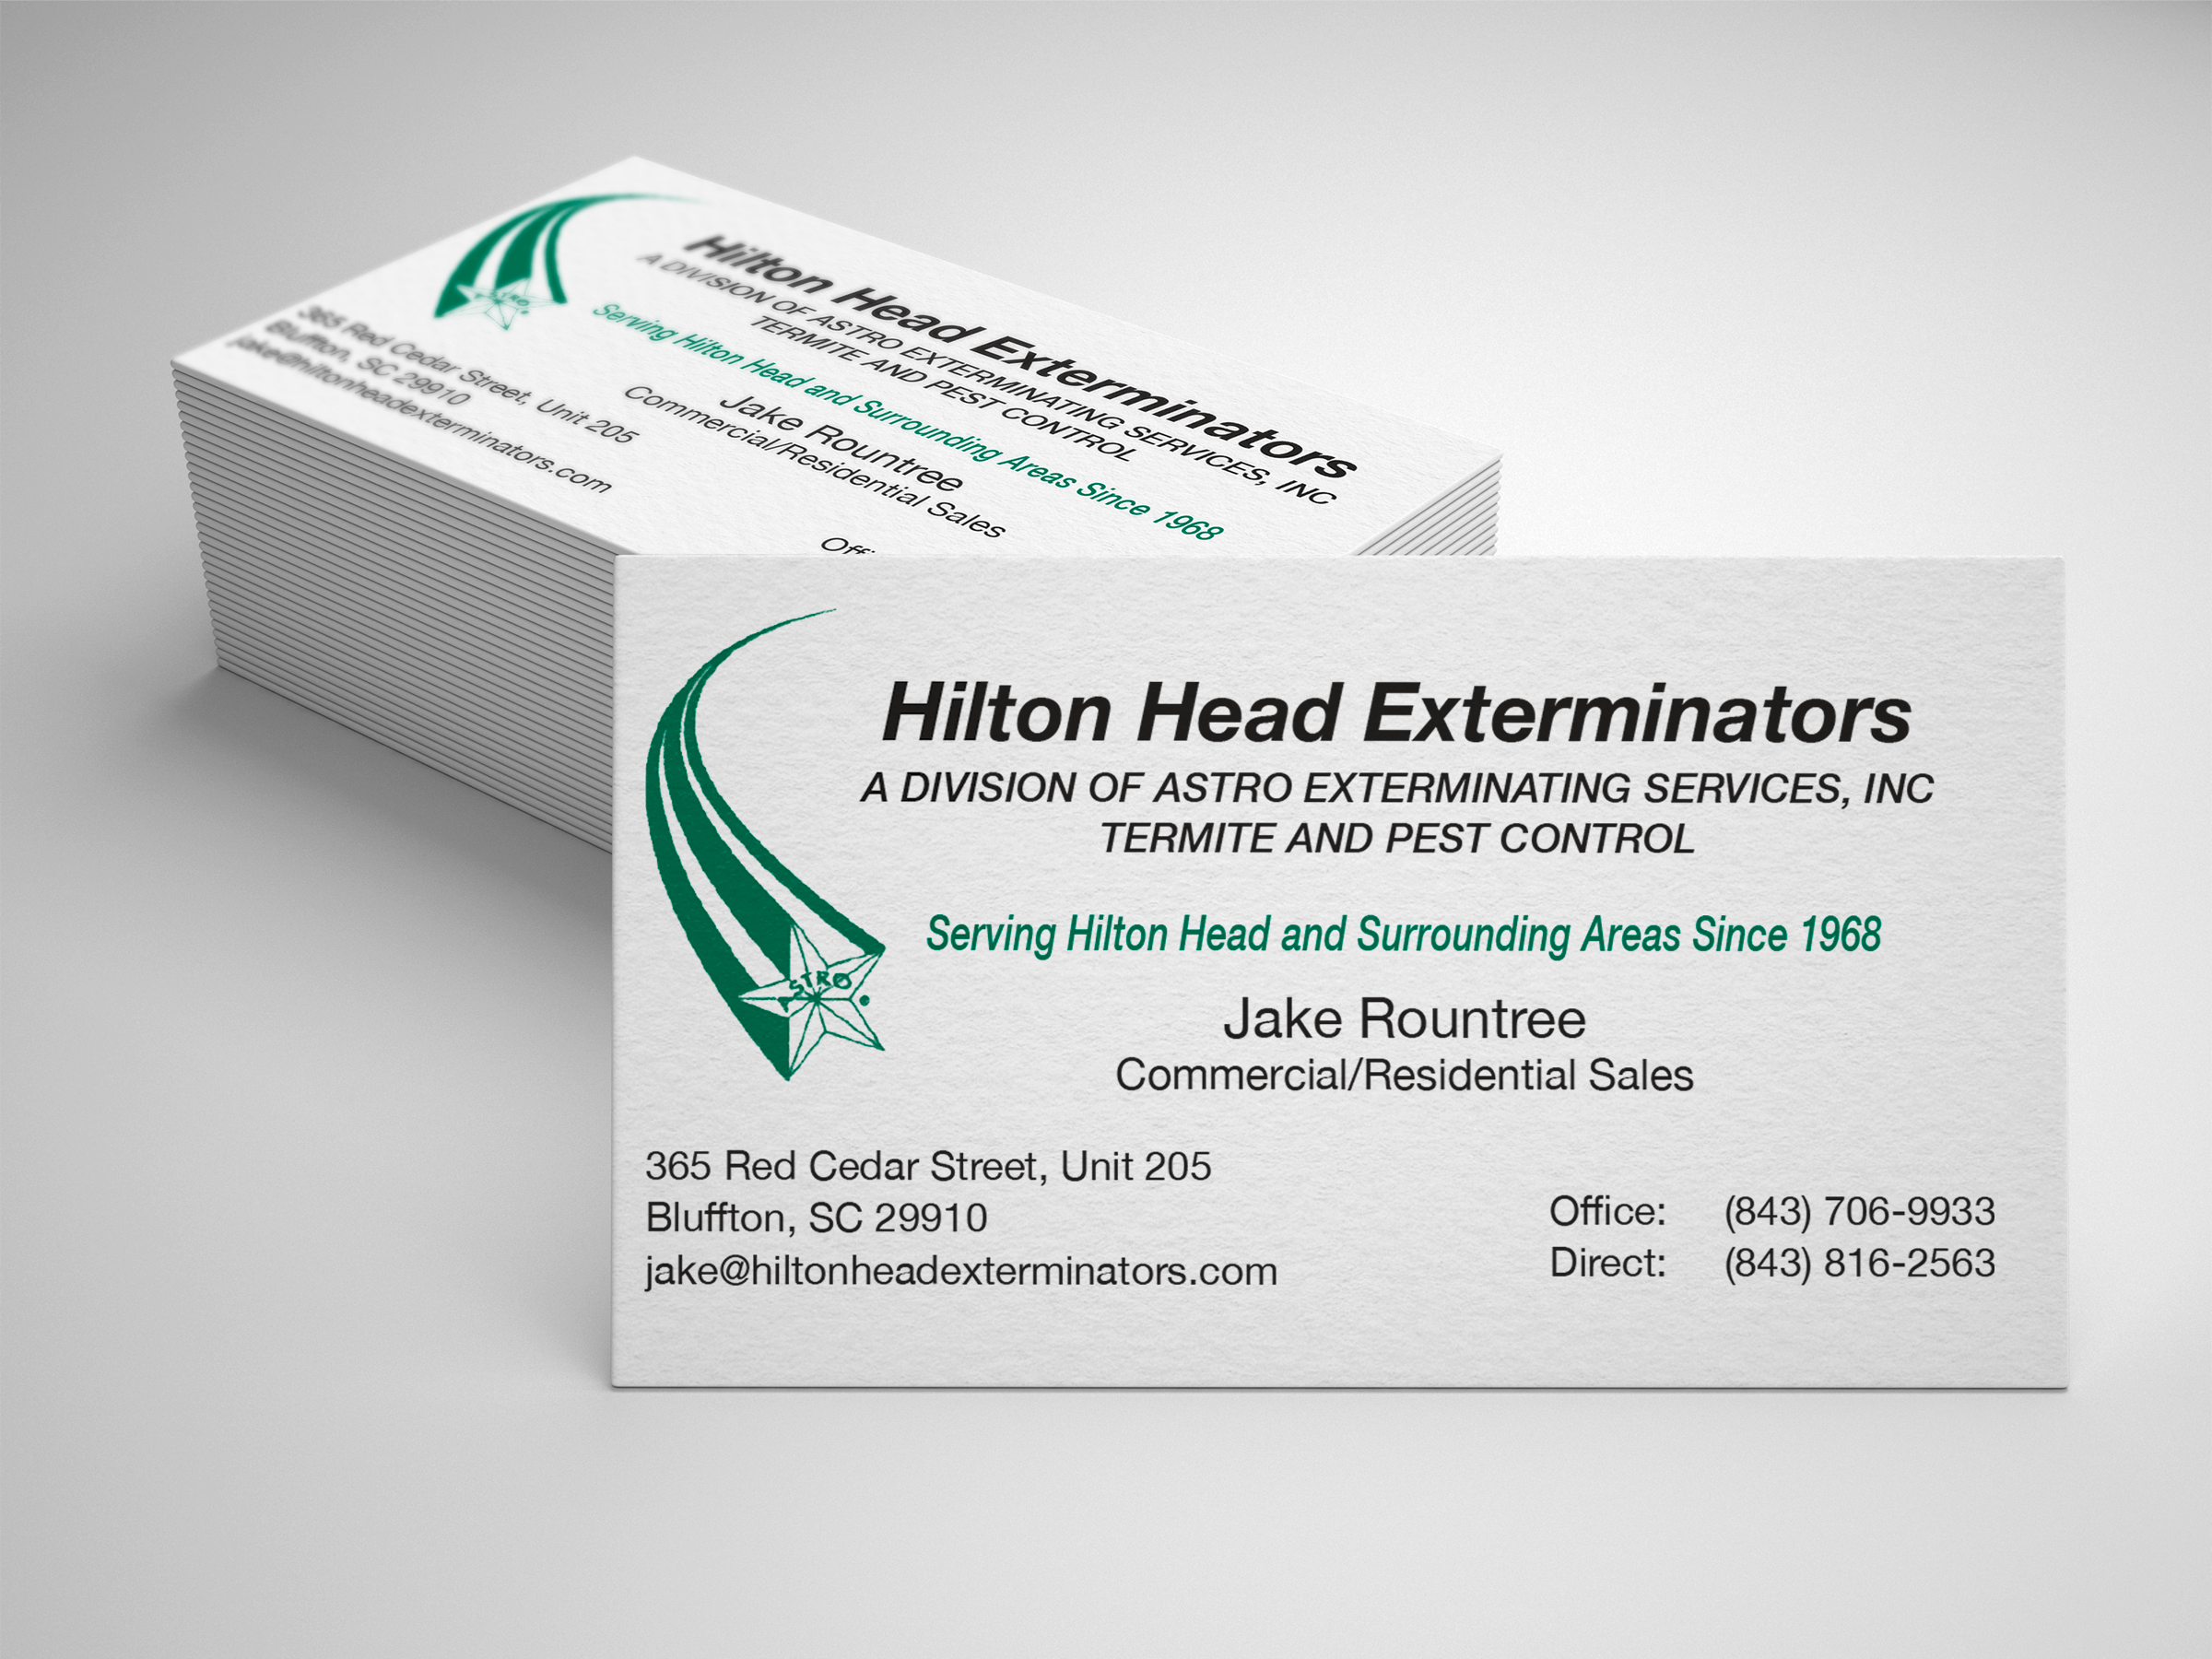 Hilton Head Exterminators Business Card Mockup.png